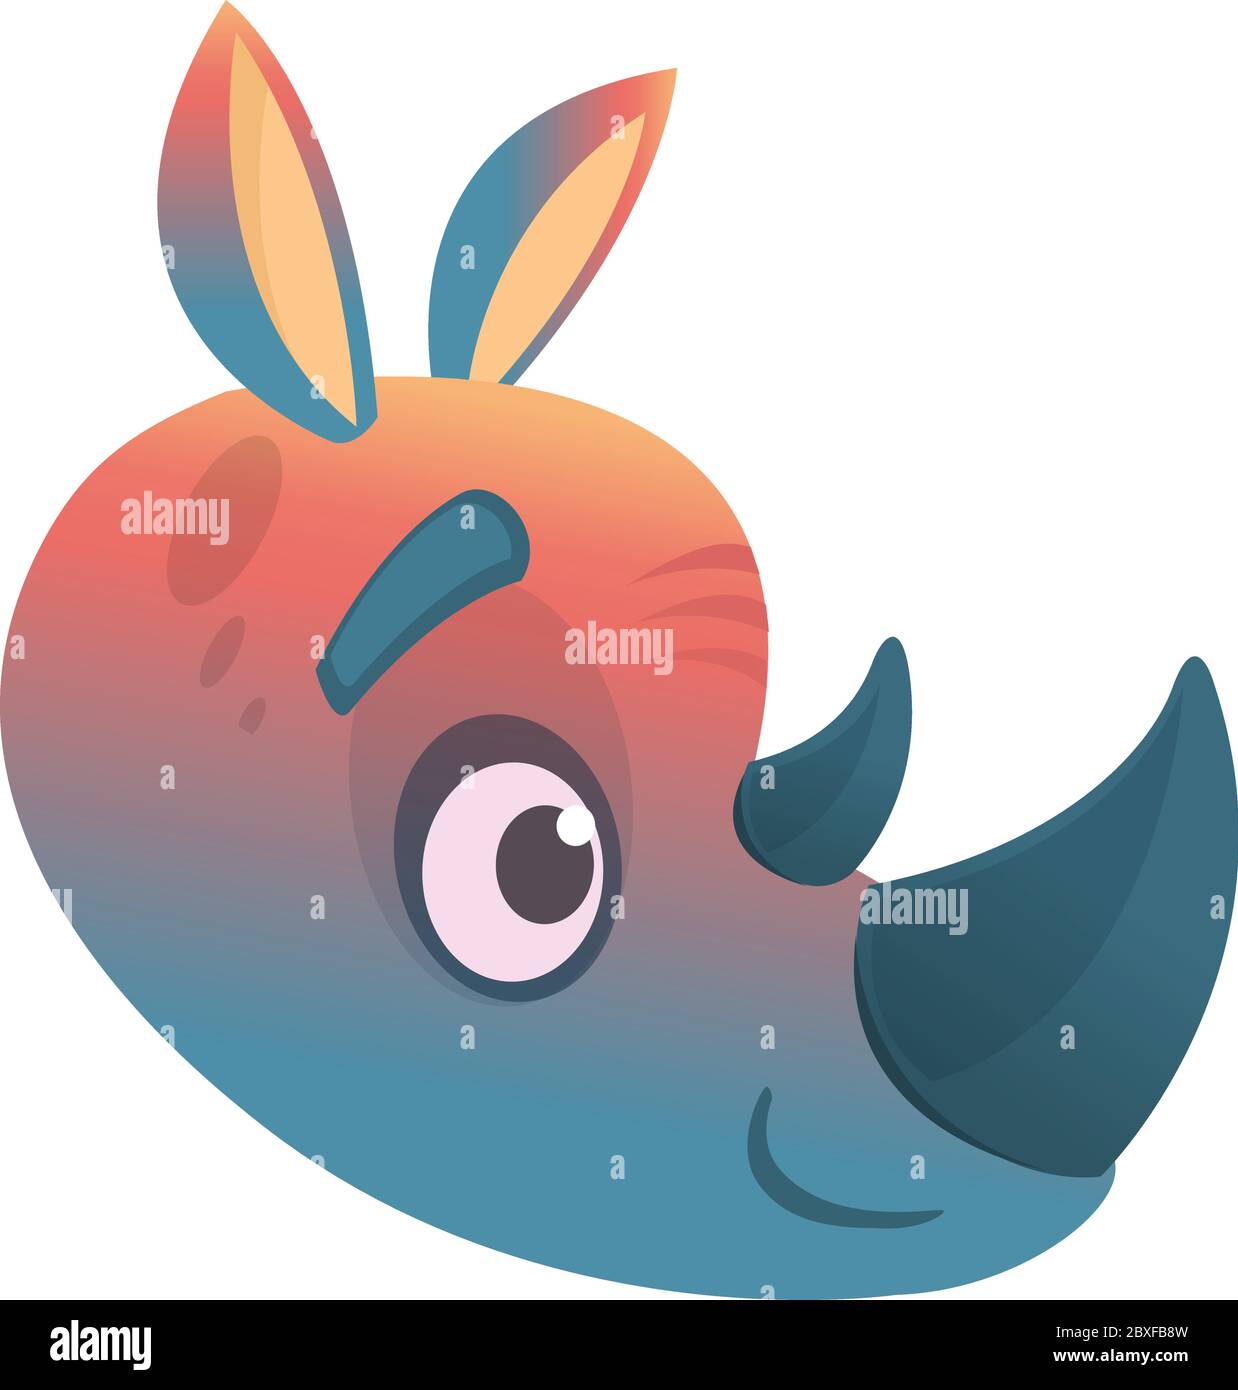 Cartoon colorful rhino head icon. Flat Bright Color Simplified Vector Illustration In Fun Cartoon Style Design Stock Vector